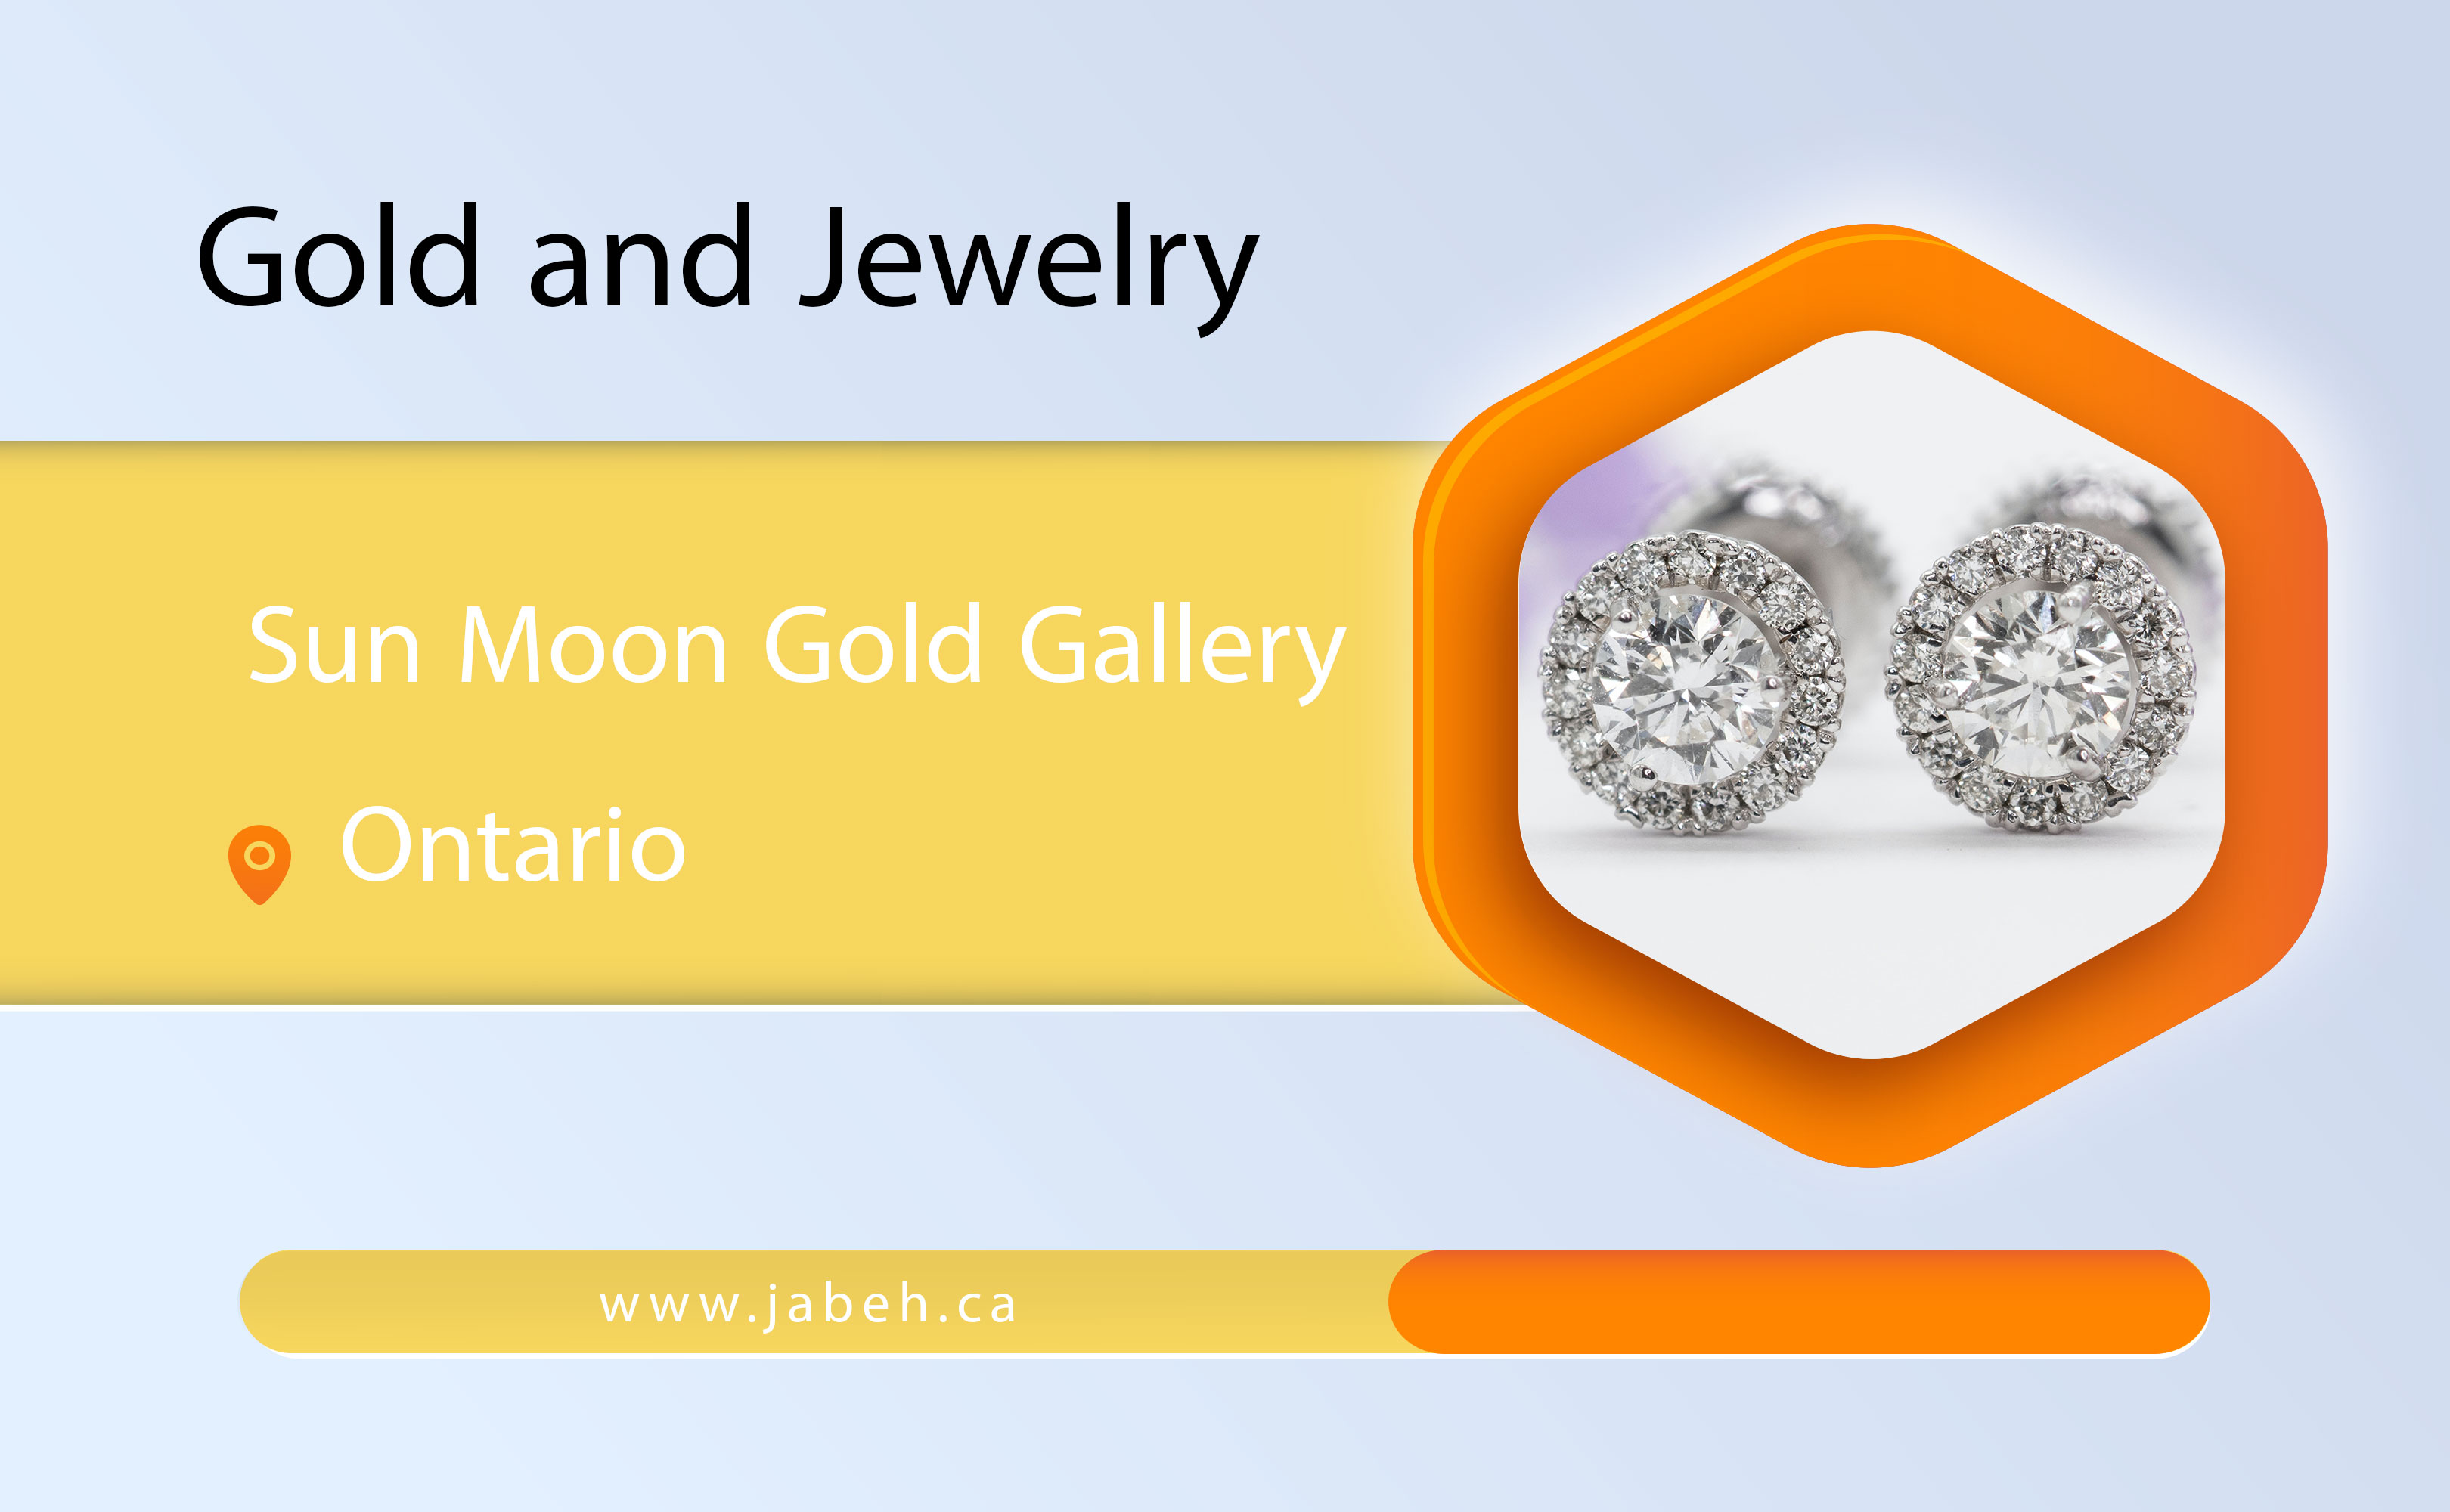 Sun Moon Gold Gallery in Ontario